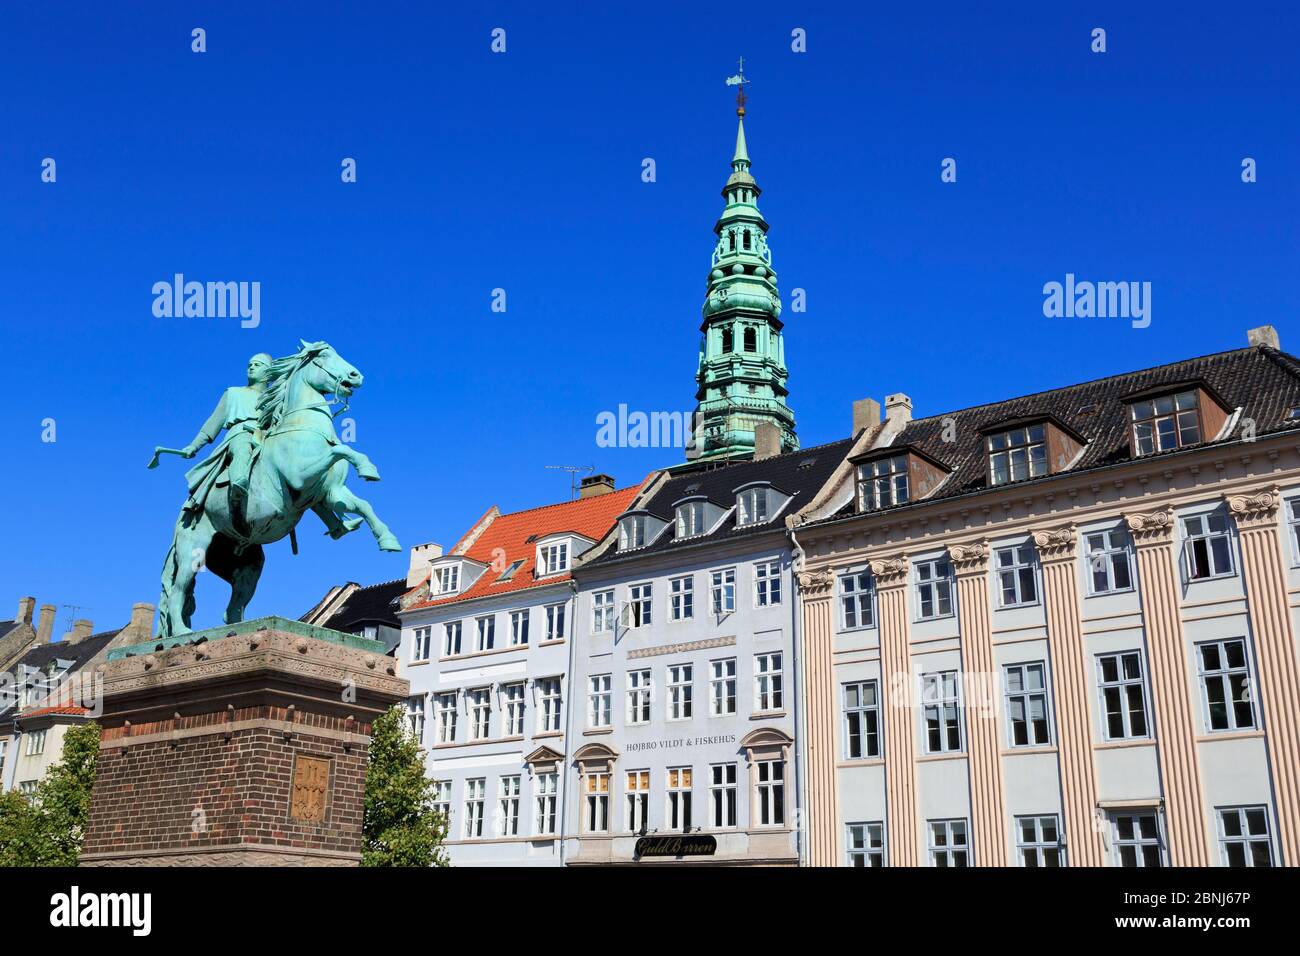 Bishop Absalon Monument, Hojbro Plads, Copenhague, Zélande, Danemark, Scandinavie, Europe Banque D'Images